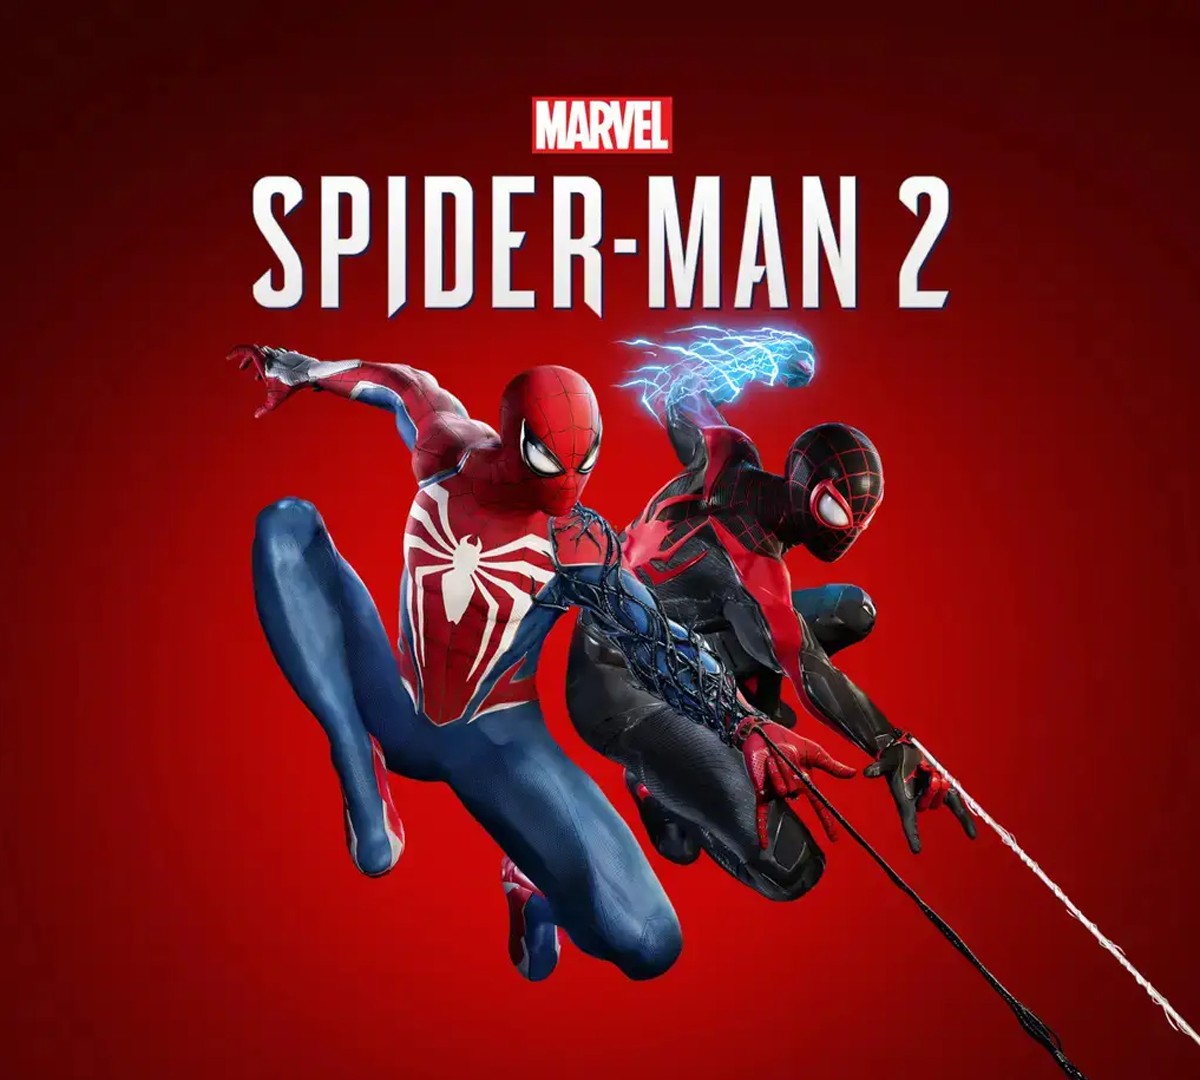 Jogo Homem Aranha - Spider-man - Ps4 - Mídia Física